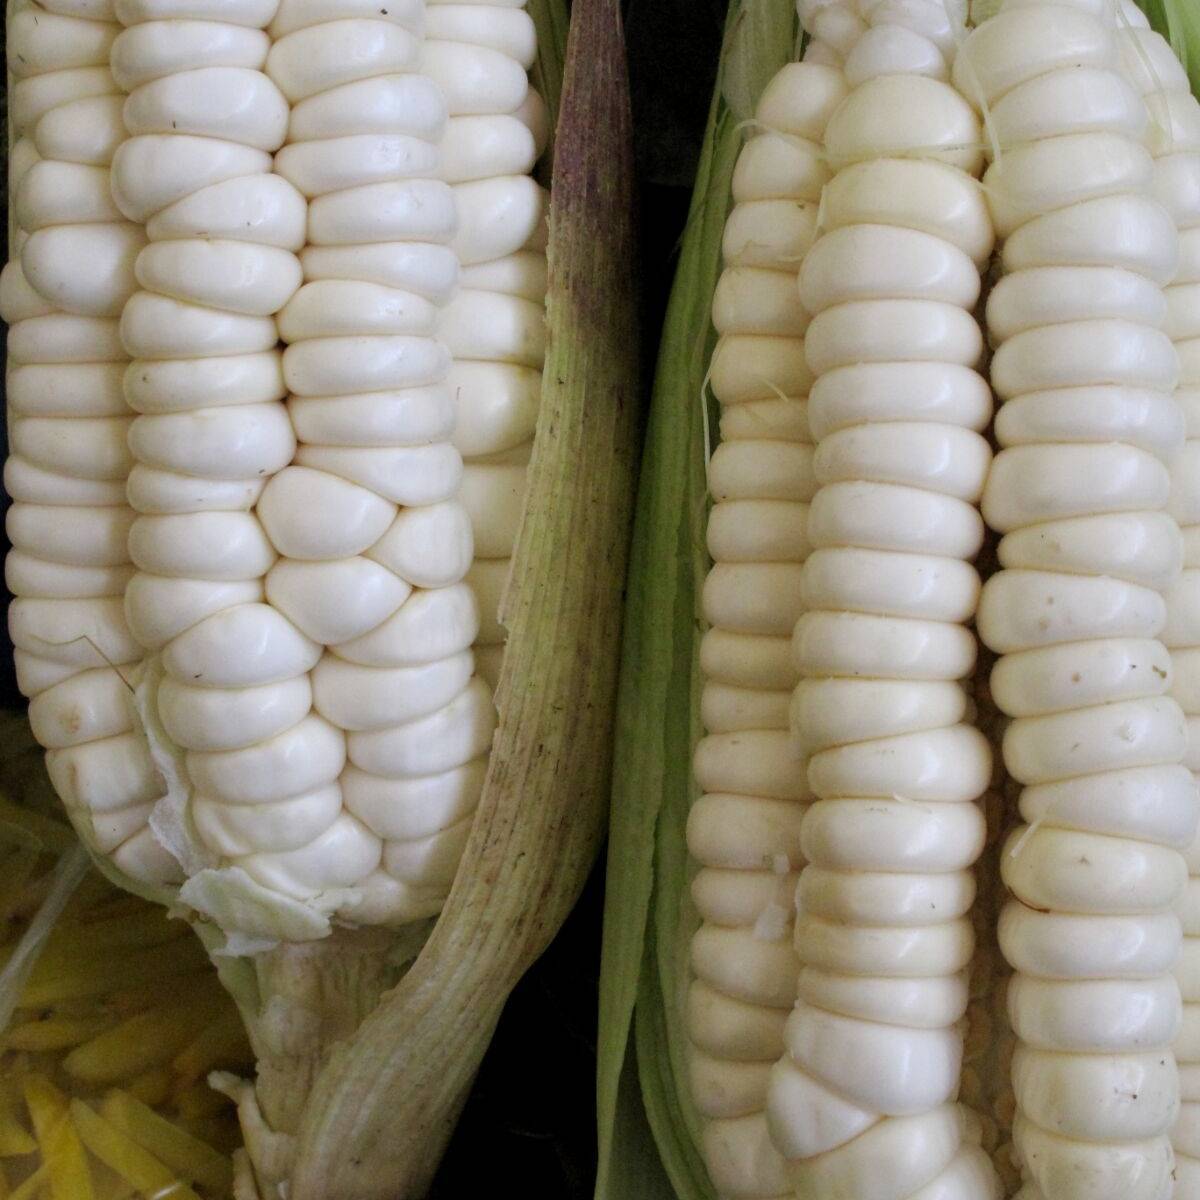 Silver mine white corn - beyond organic seeds